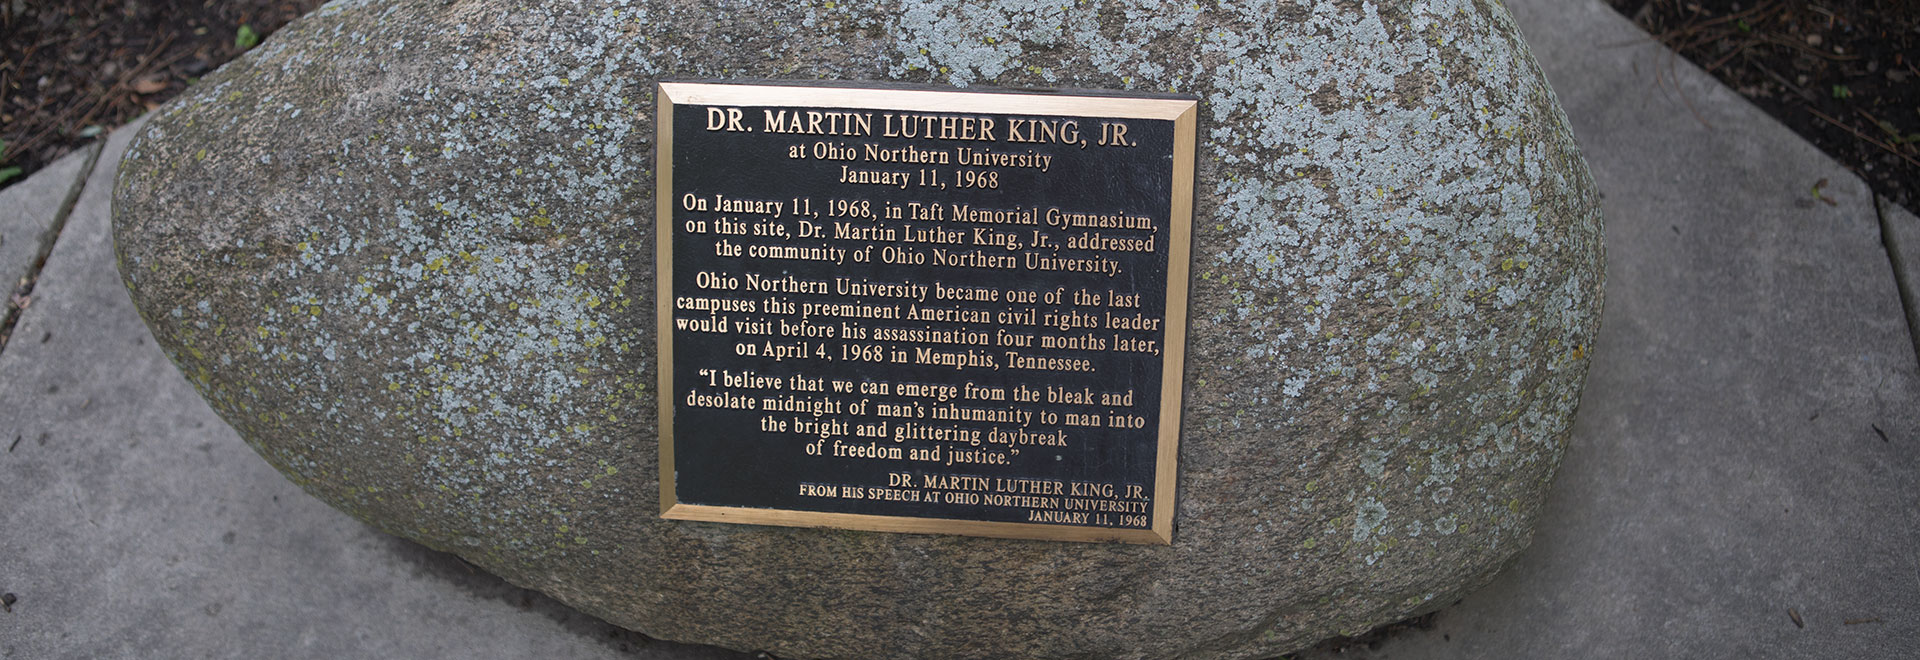 The plaque at ONU commemorating MLK's speech.